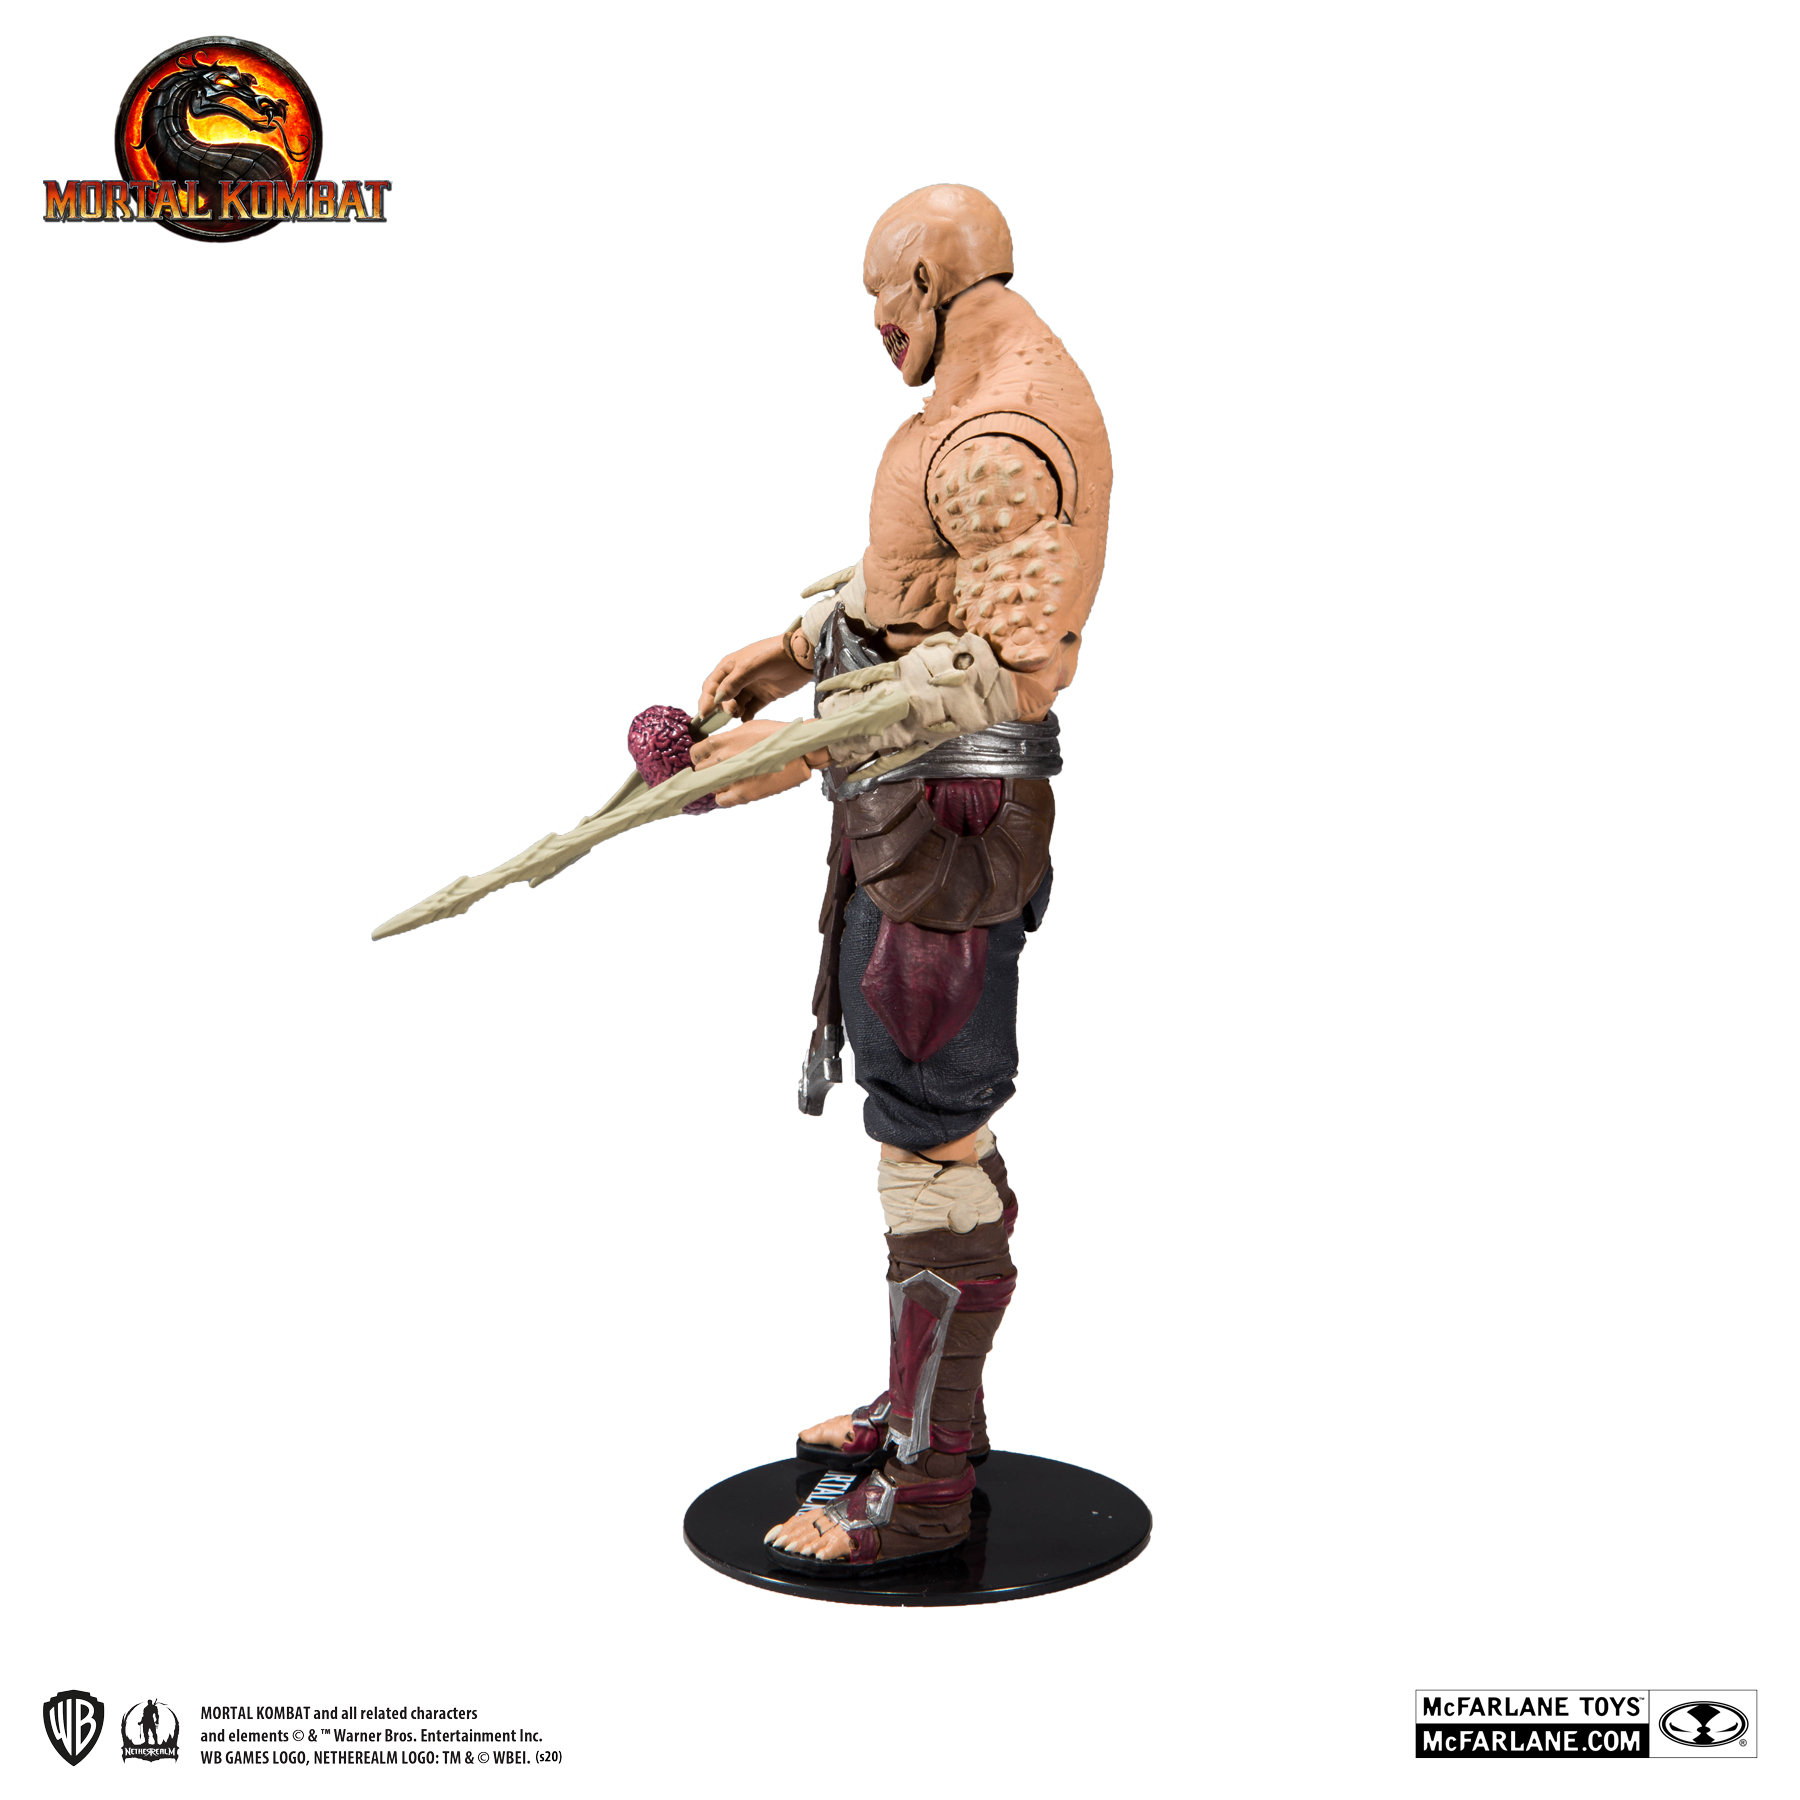 2020 McFarlane Toys Mortal Kombat Action Figure: BARAKA (Tarkatan